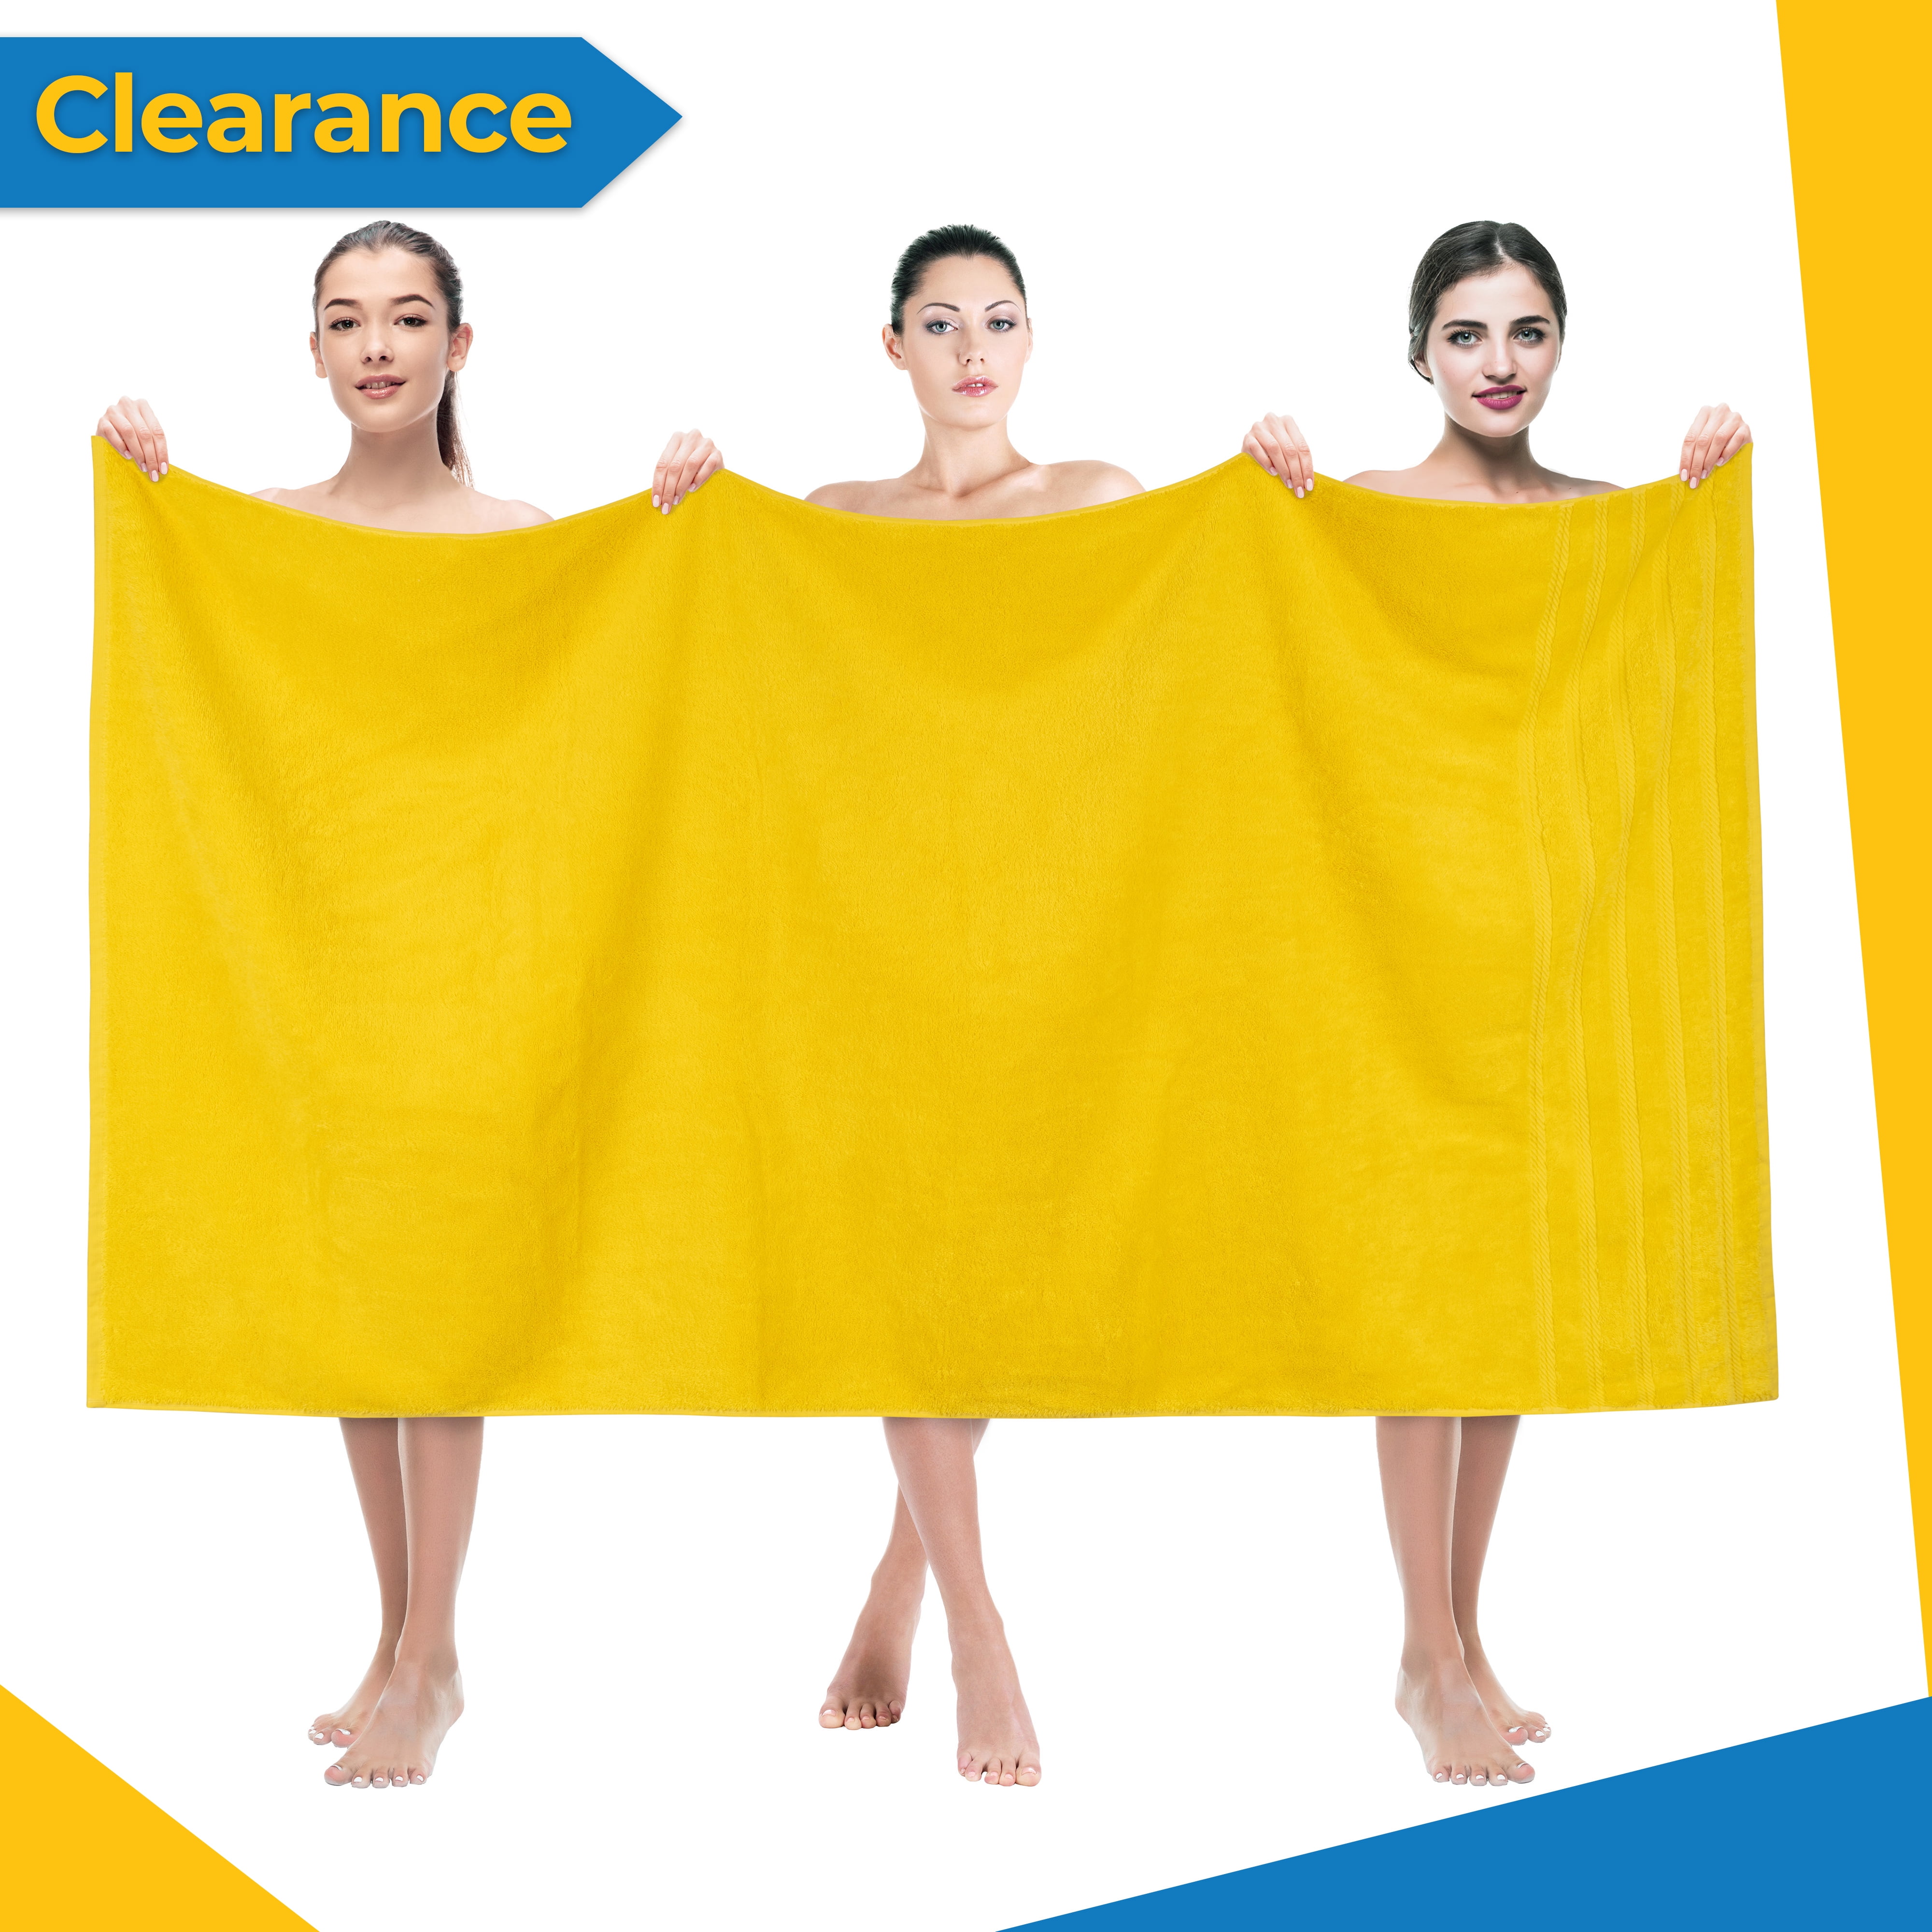  American Bath Towels Bath Sheets 40x80 Clearance, 100